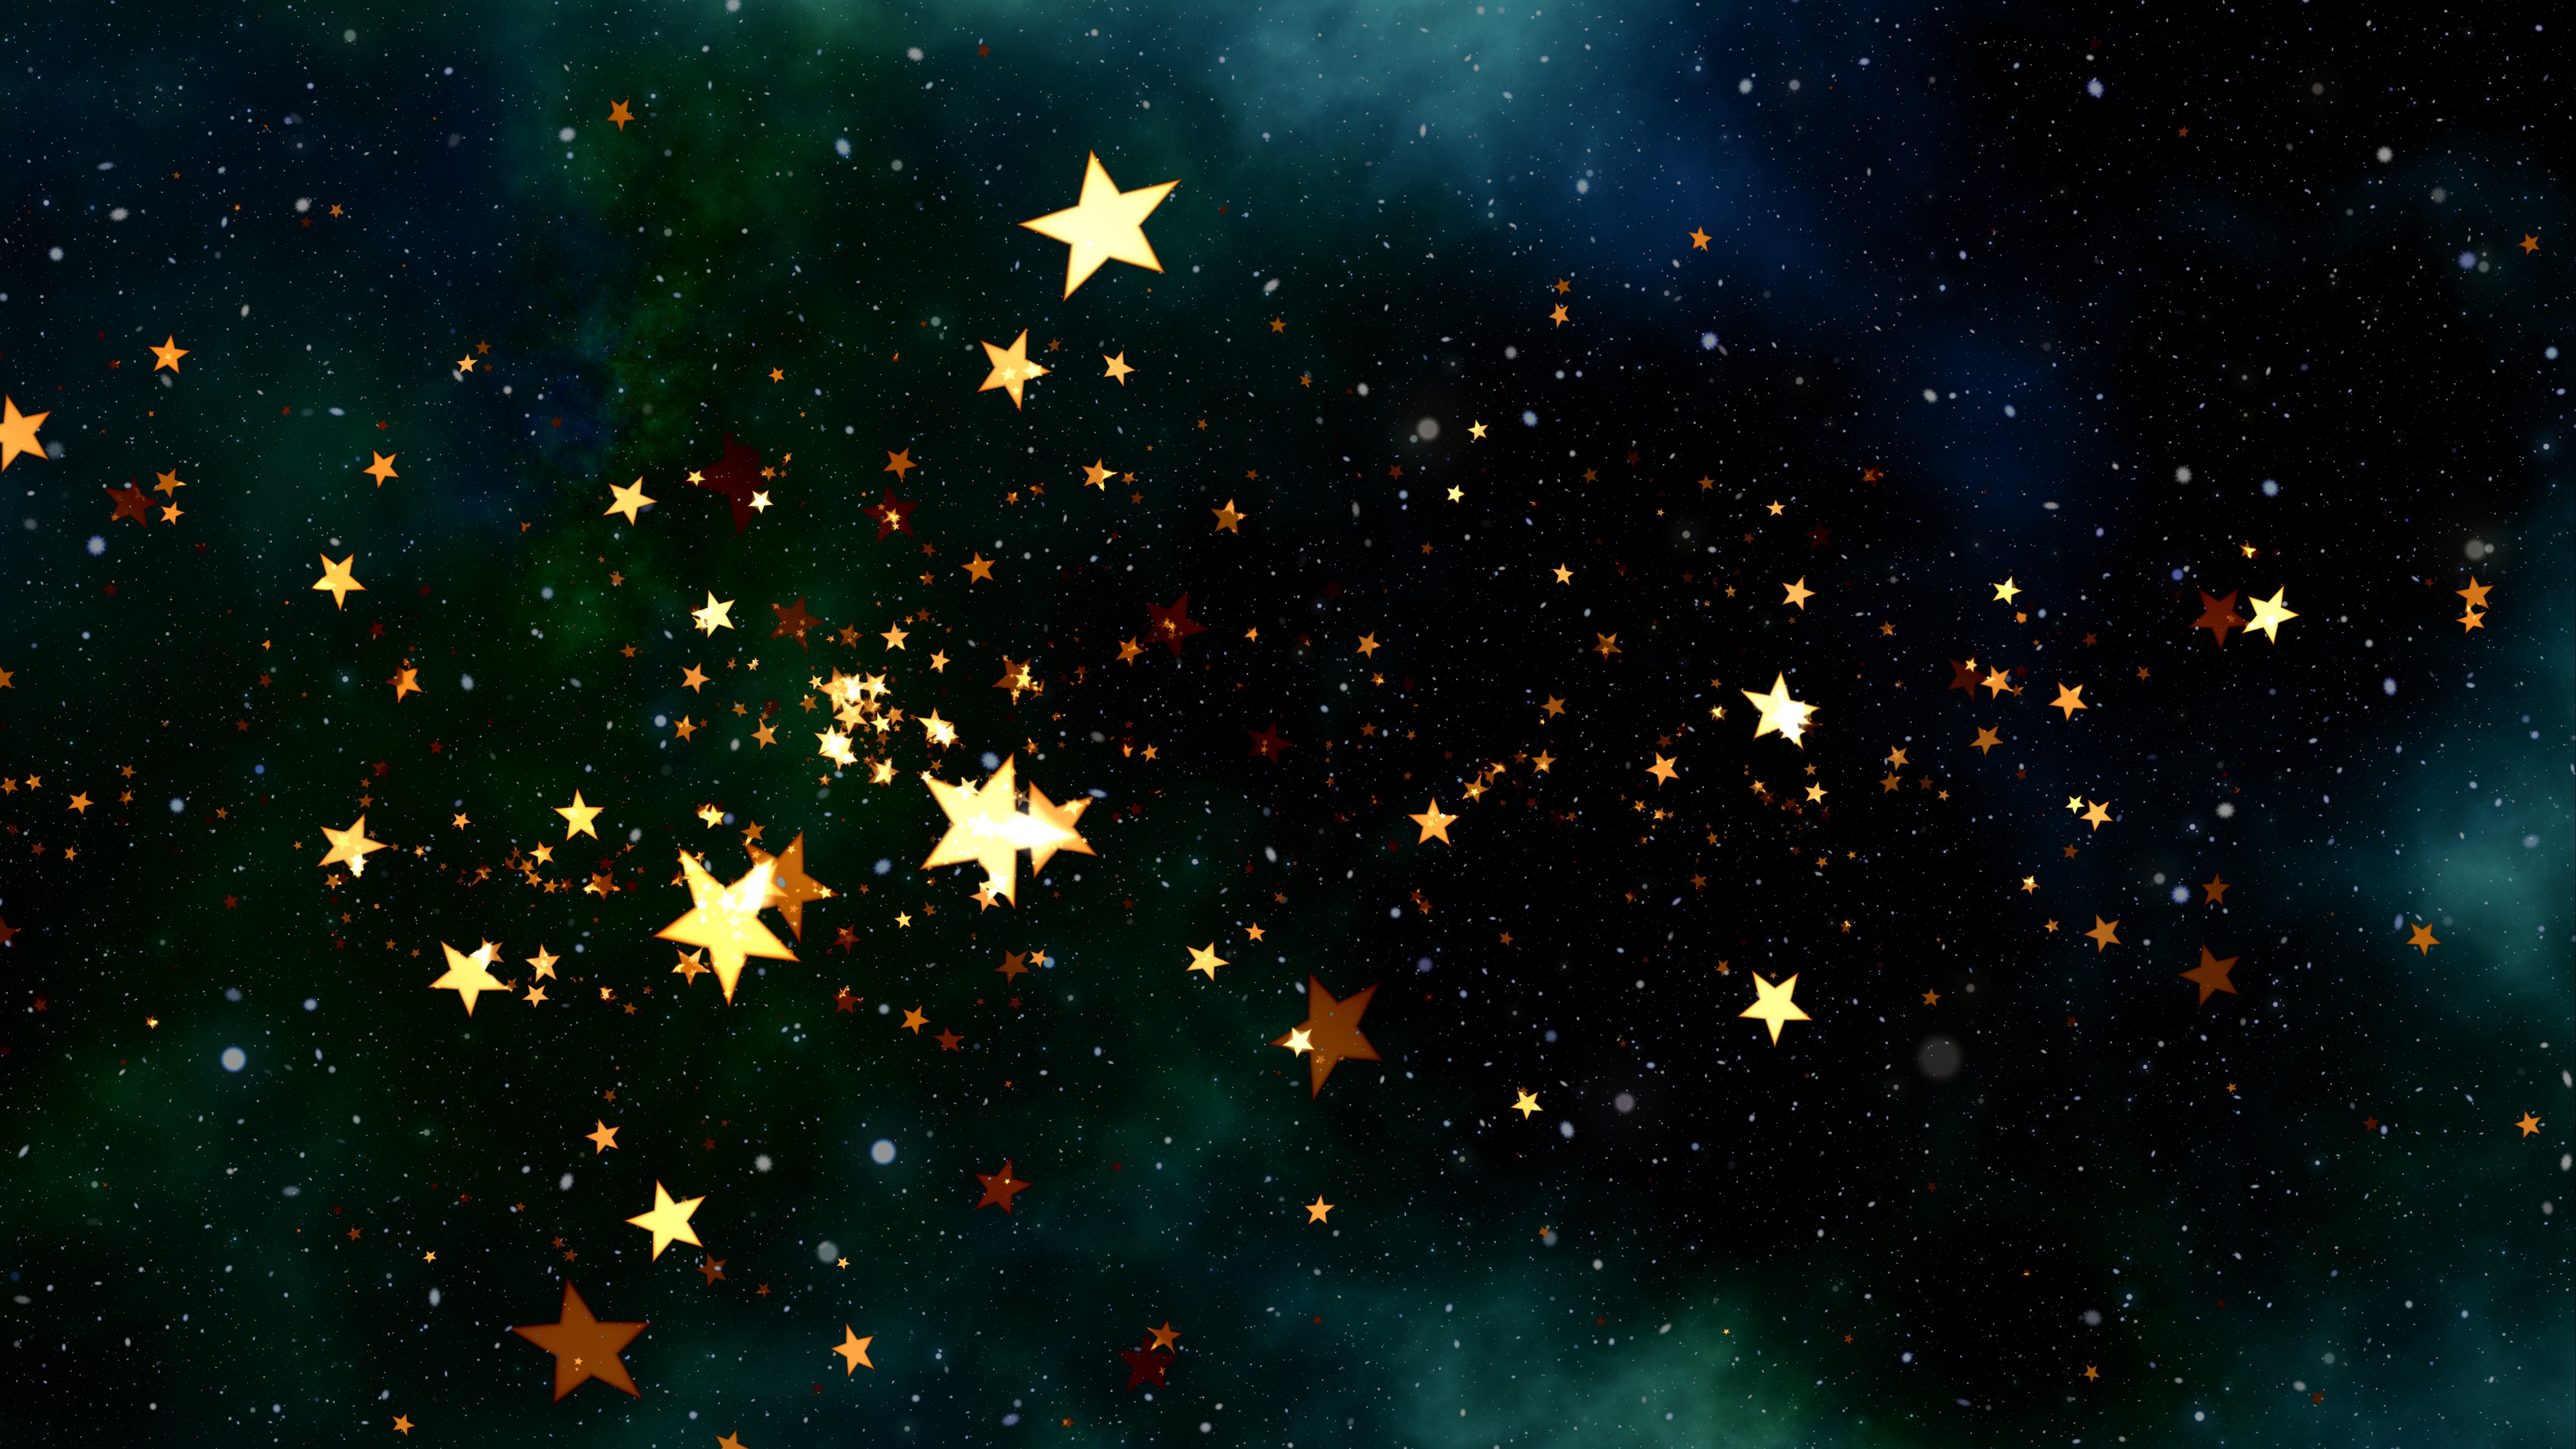 space stars wallpaper hd